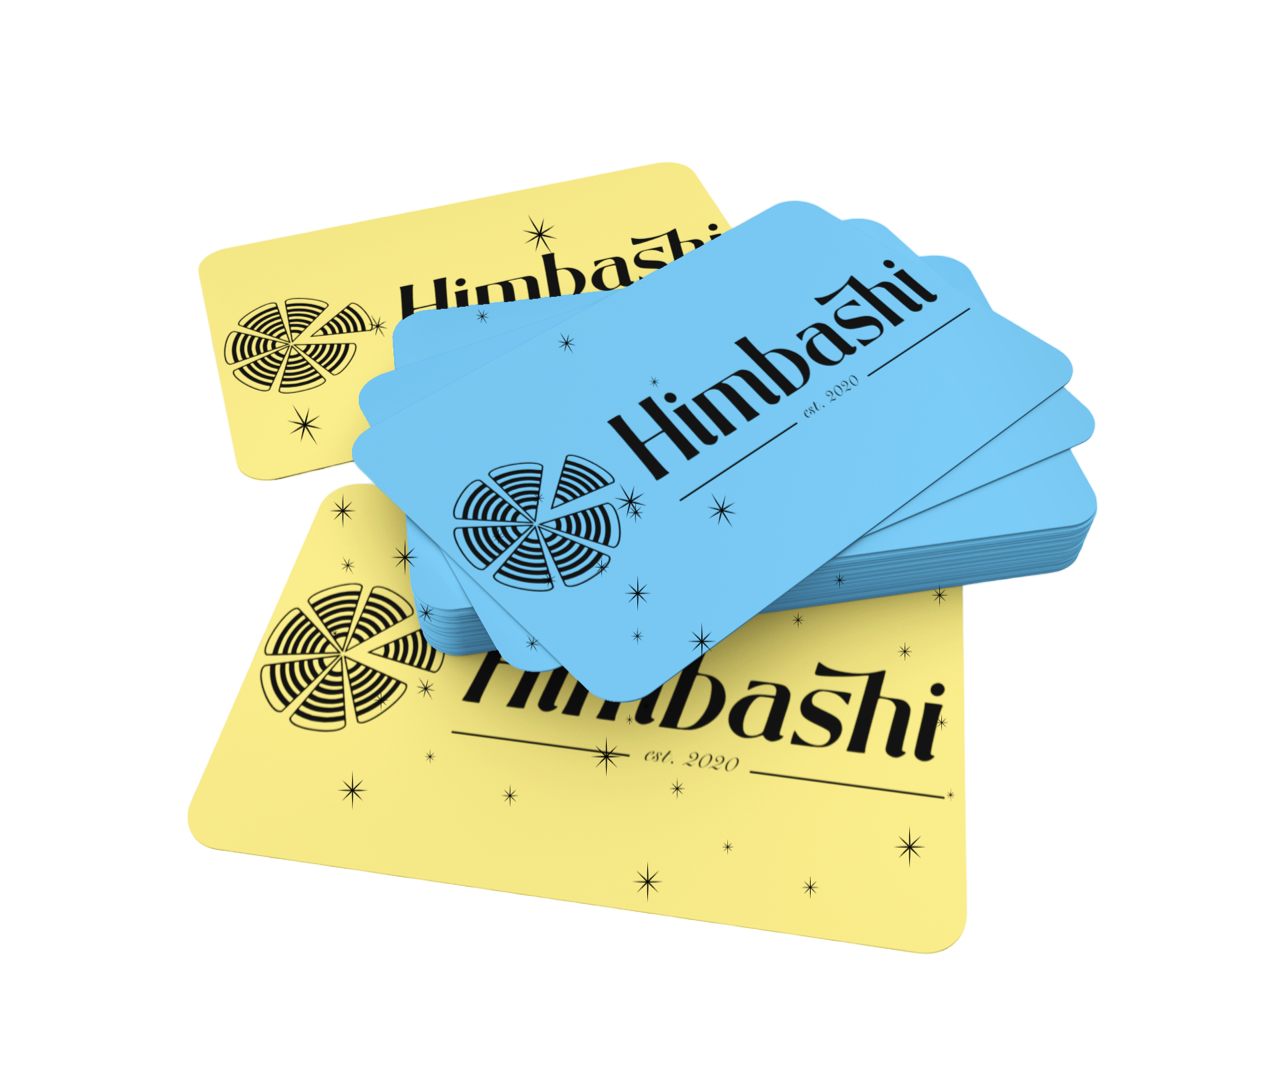 Himbashi Gift Card